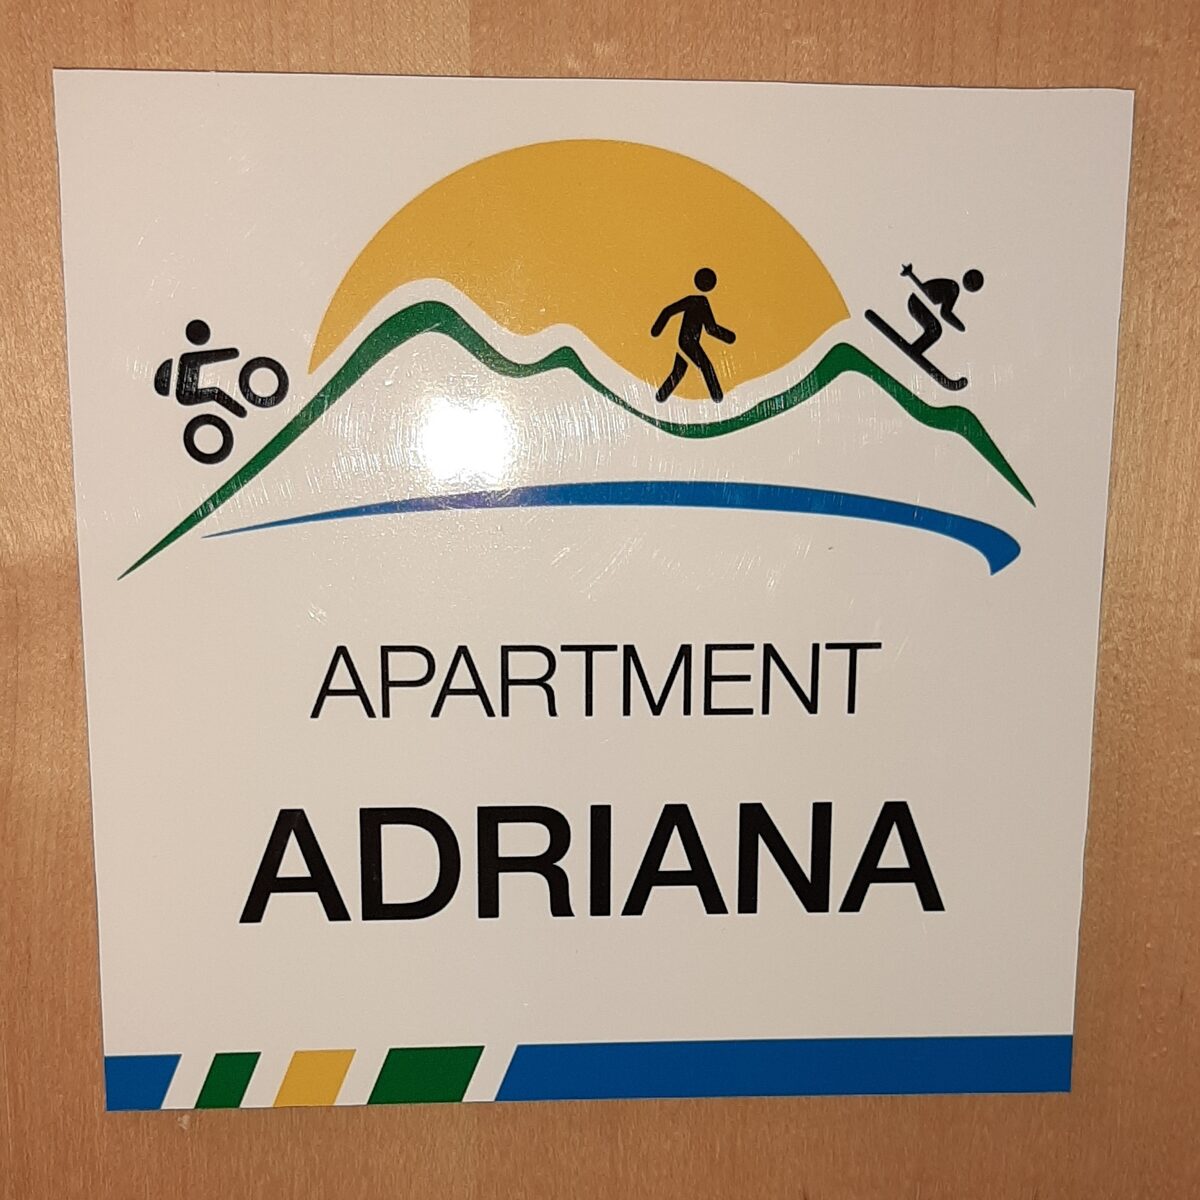 Appartement - Nuhnestrasse 2b | Winterberg - Adriana